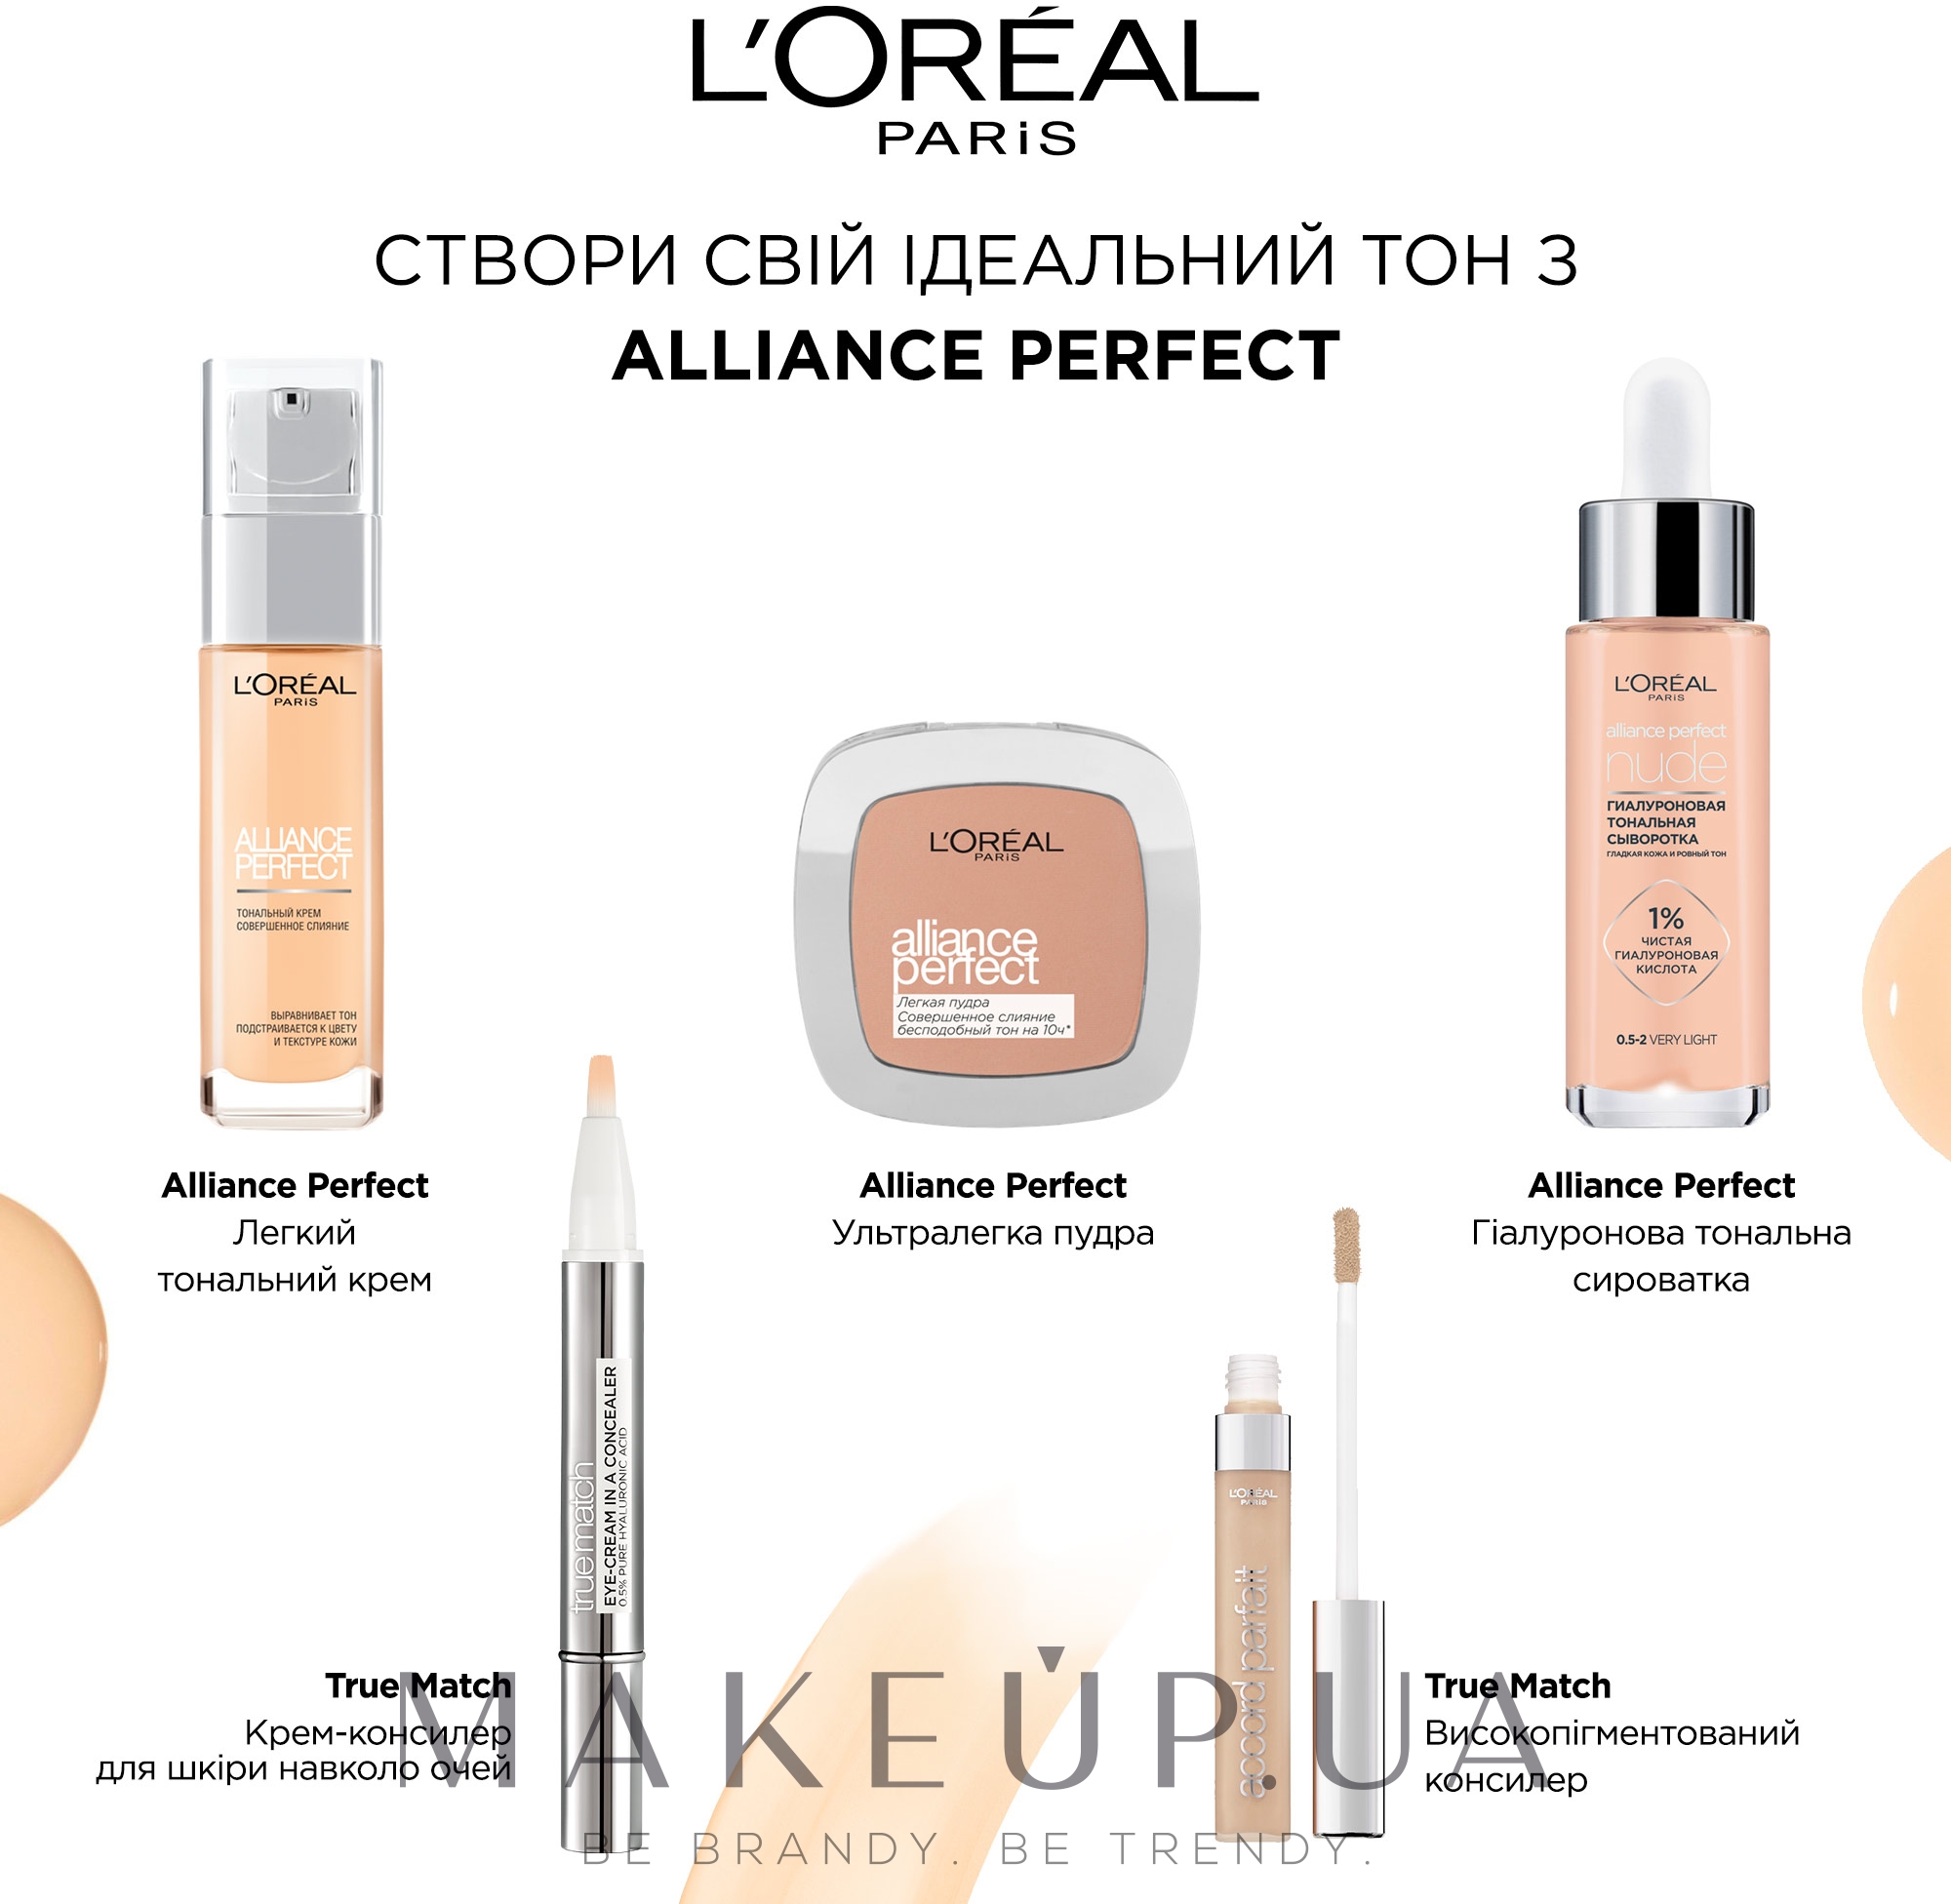 L`Oréal Paris Alliance Perfect Nude